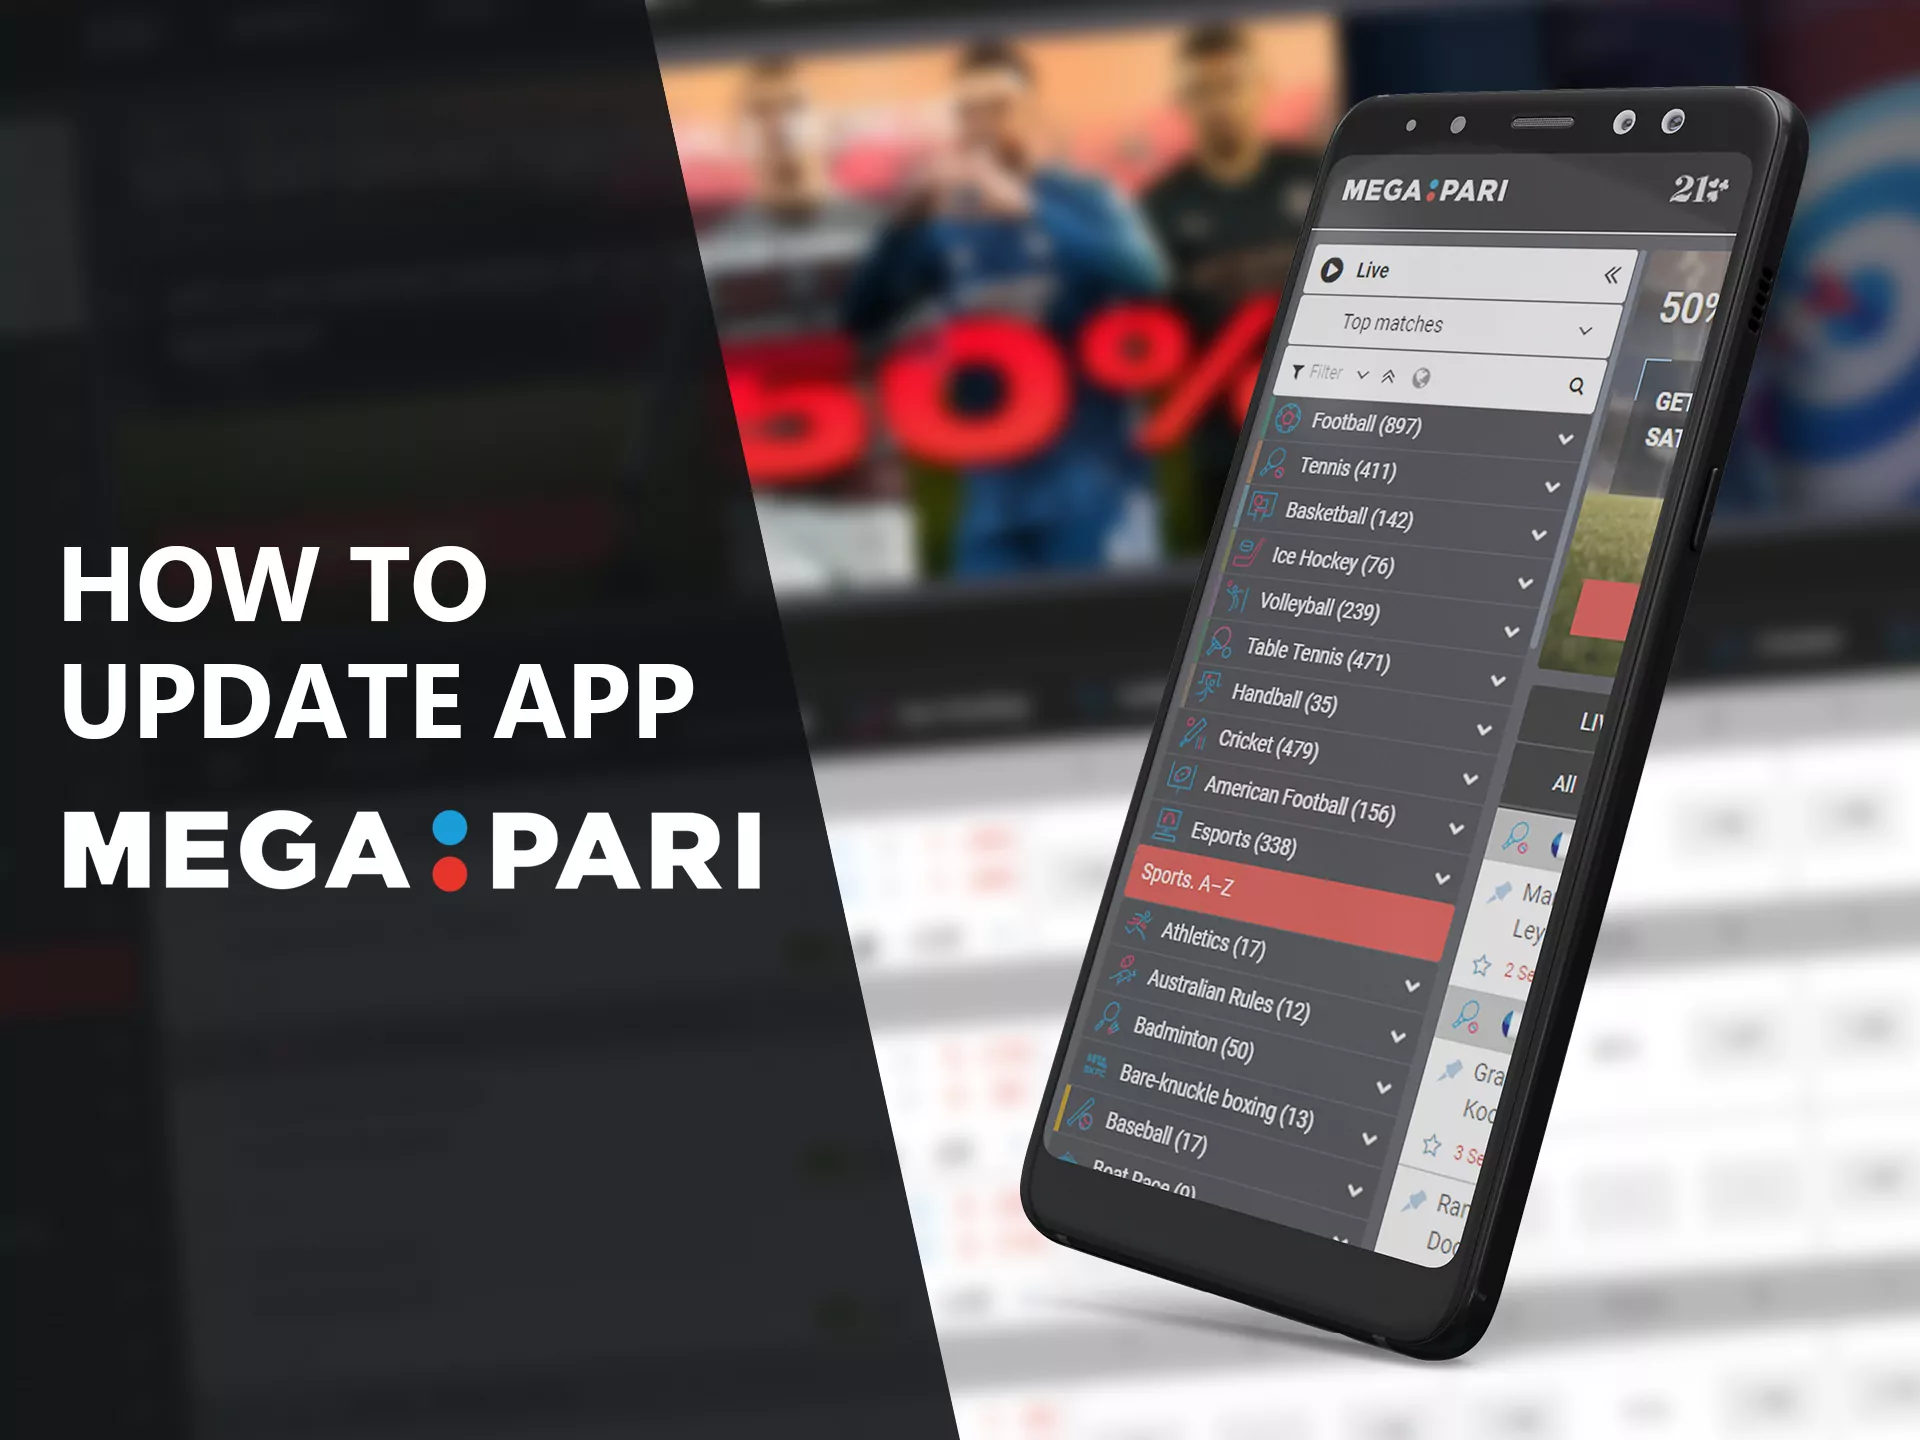 Update the Megapari app to the latest version.